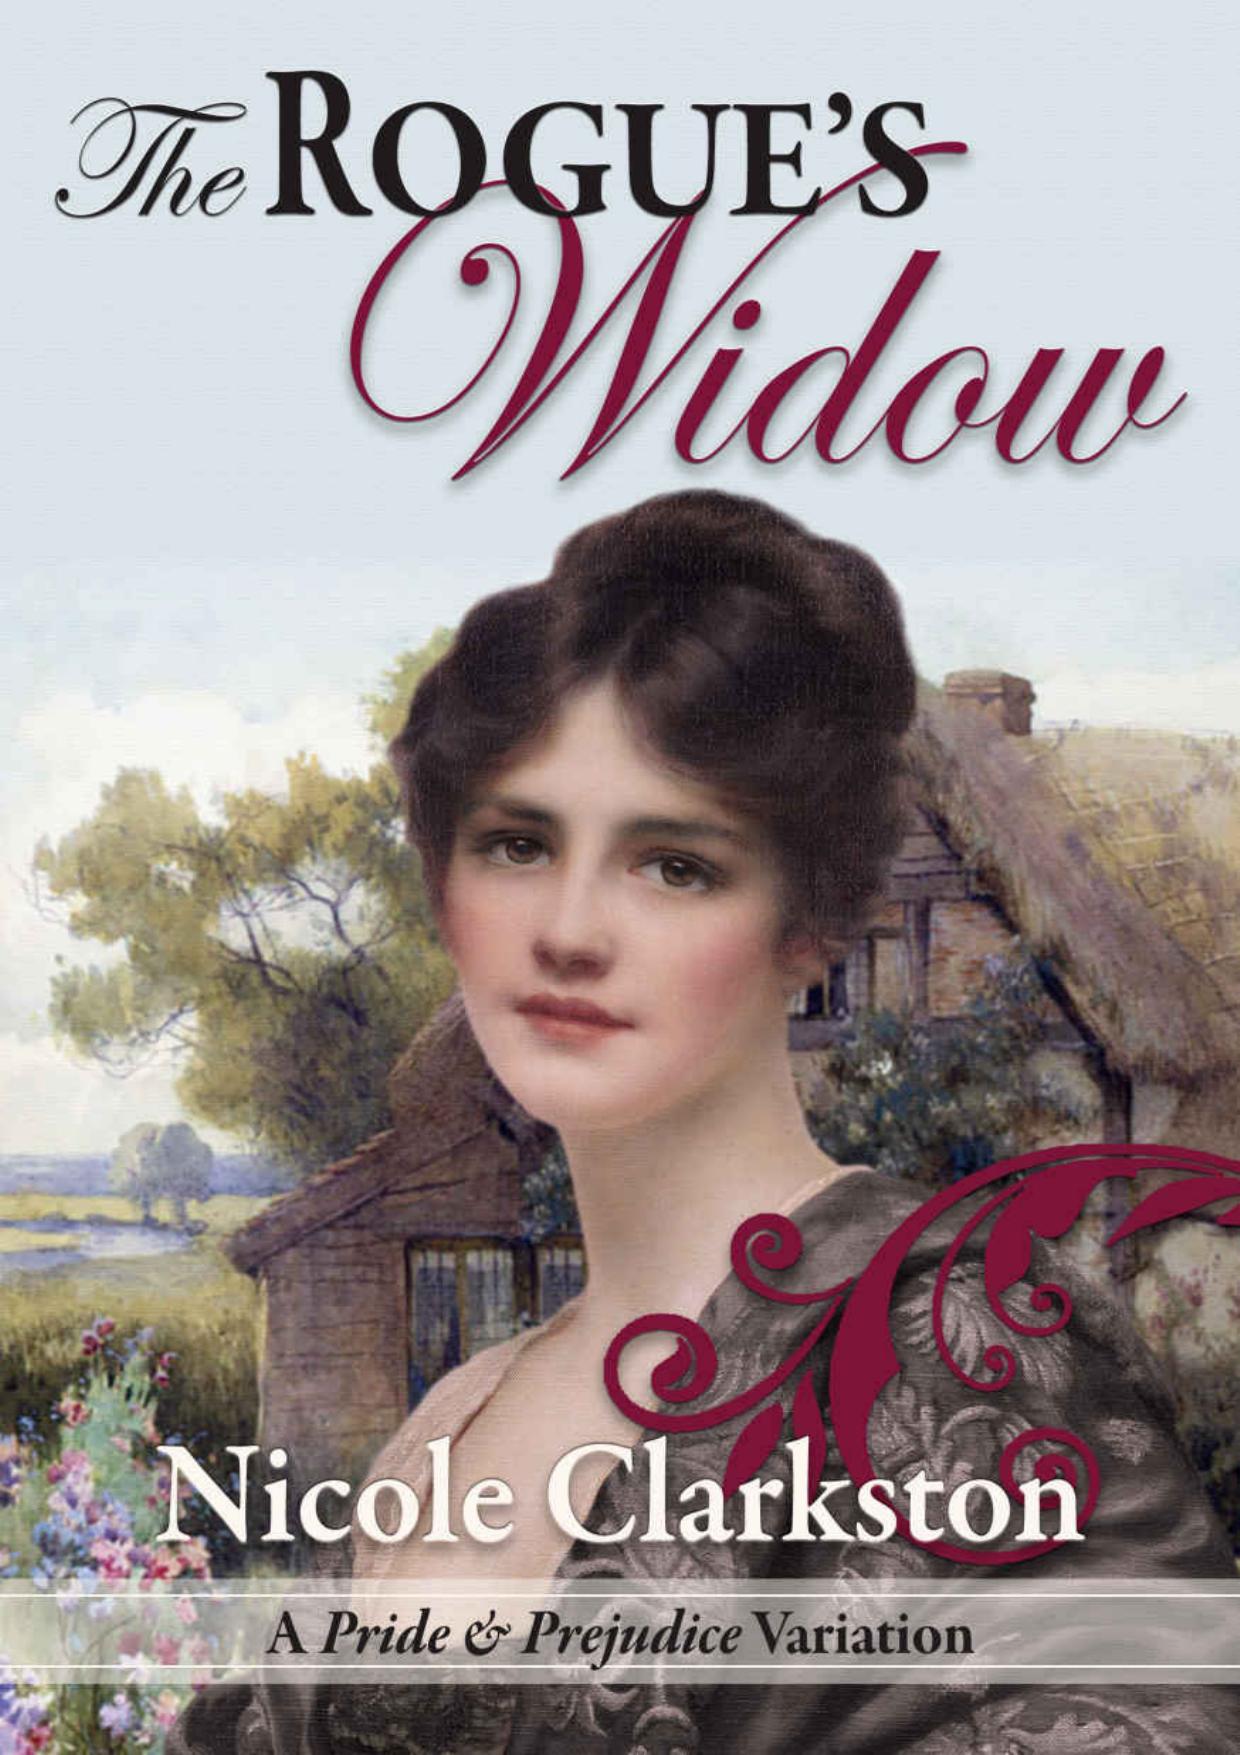 The Rogueâs Widow: A Pride and Prejudice Variation by Clarkston Nicole